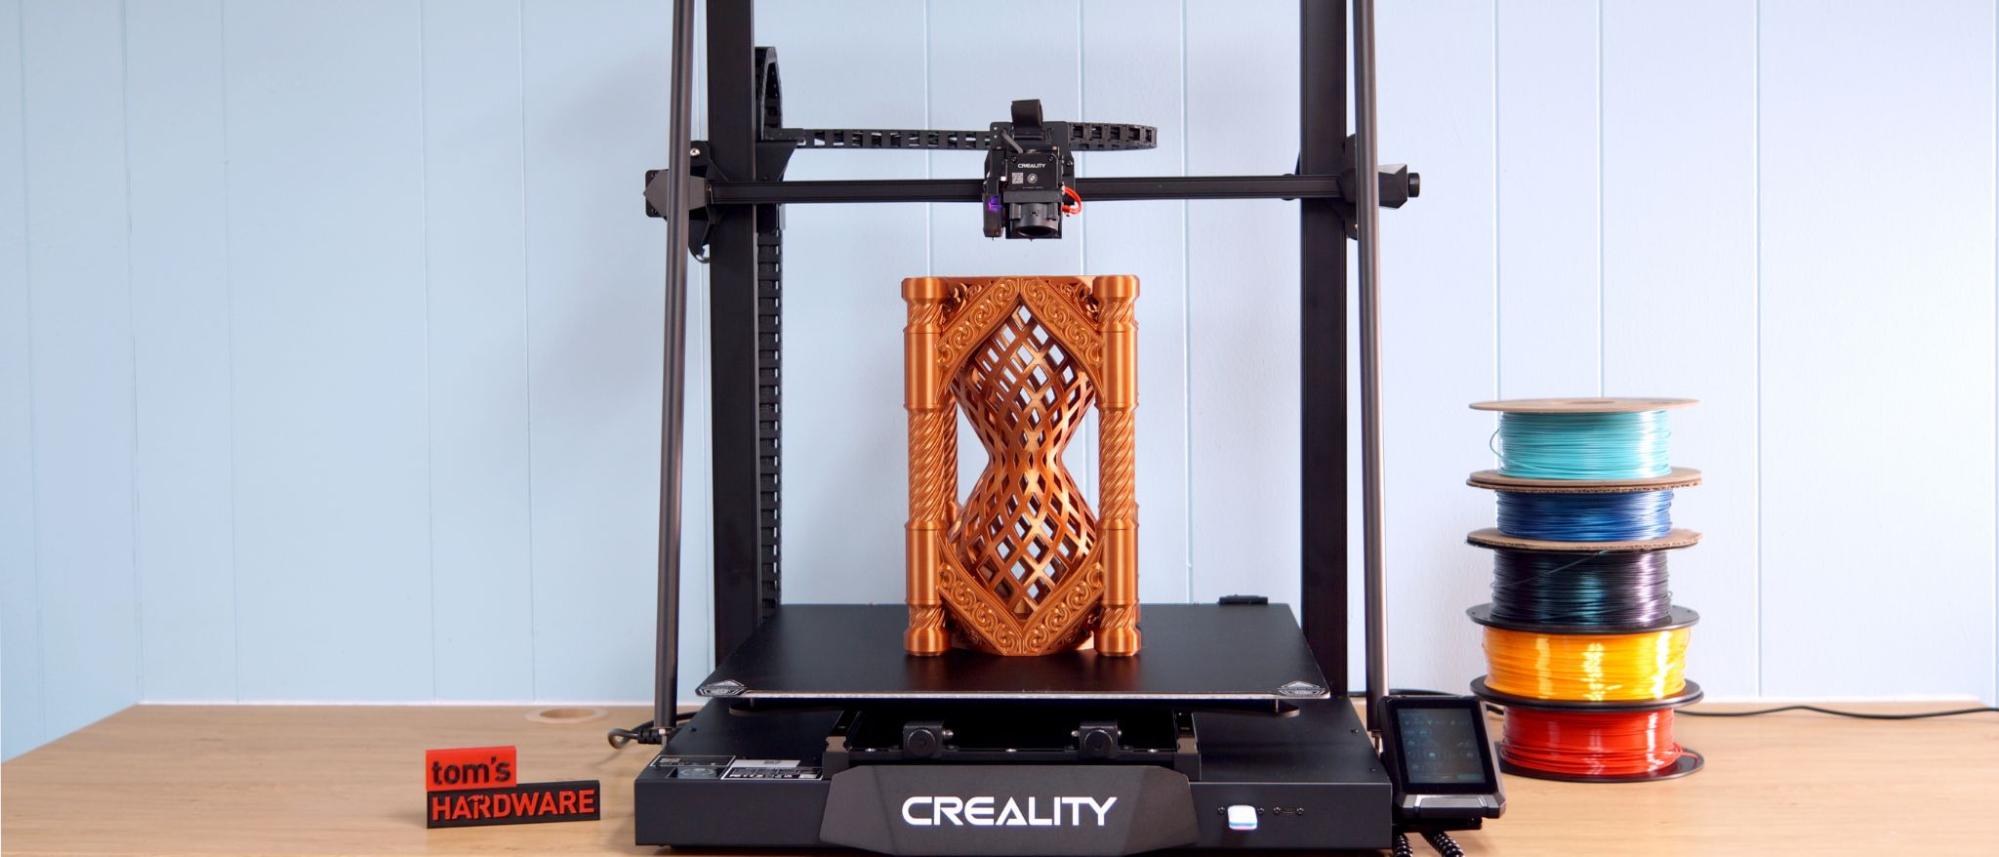 Creality CR-10 Smart Desktop 3D Printers - Specifications - 3D